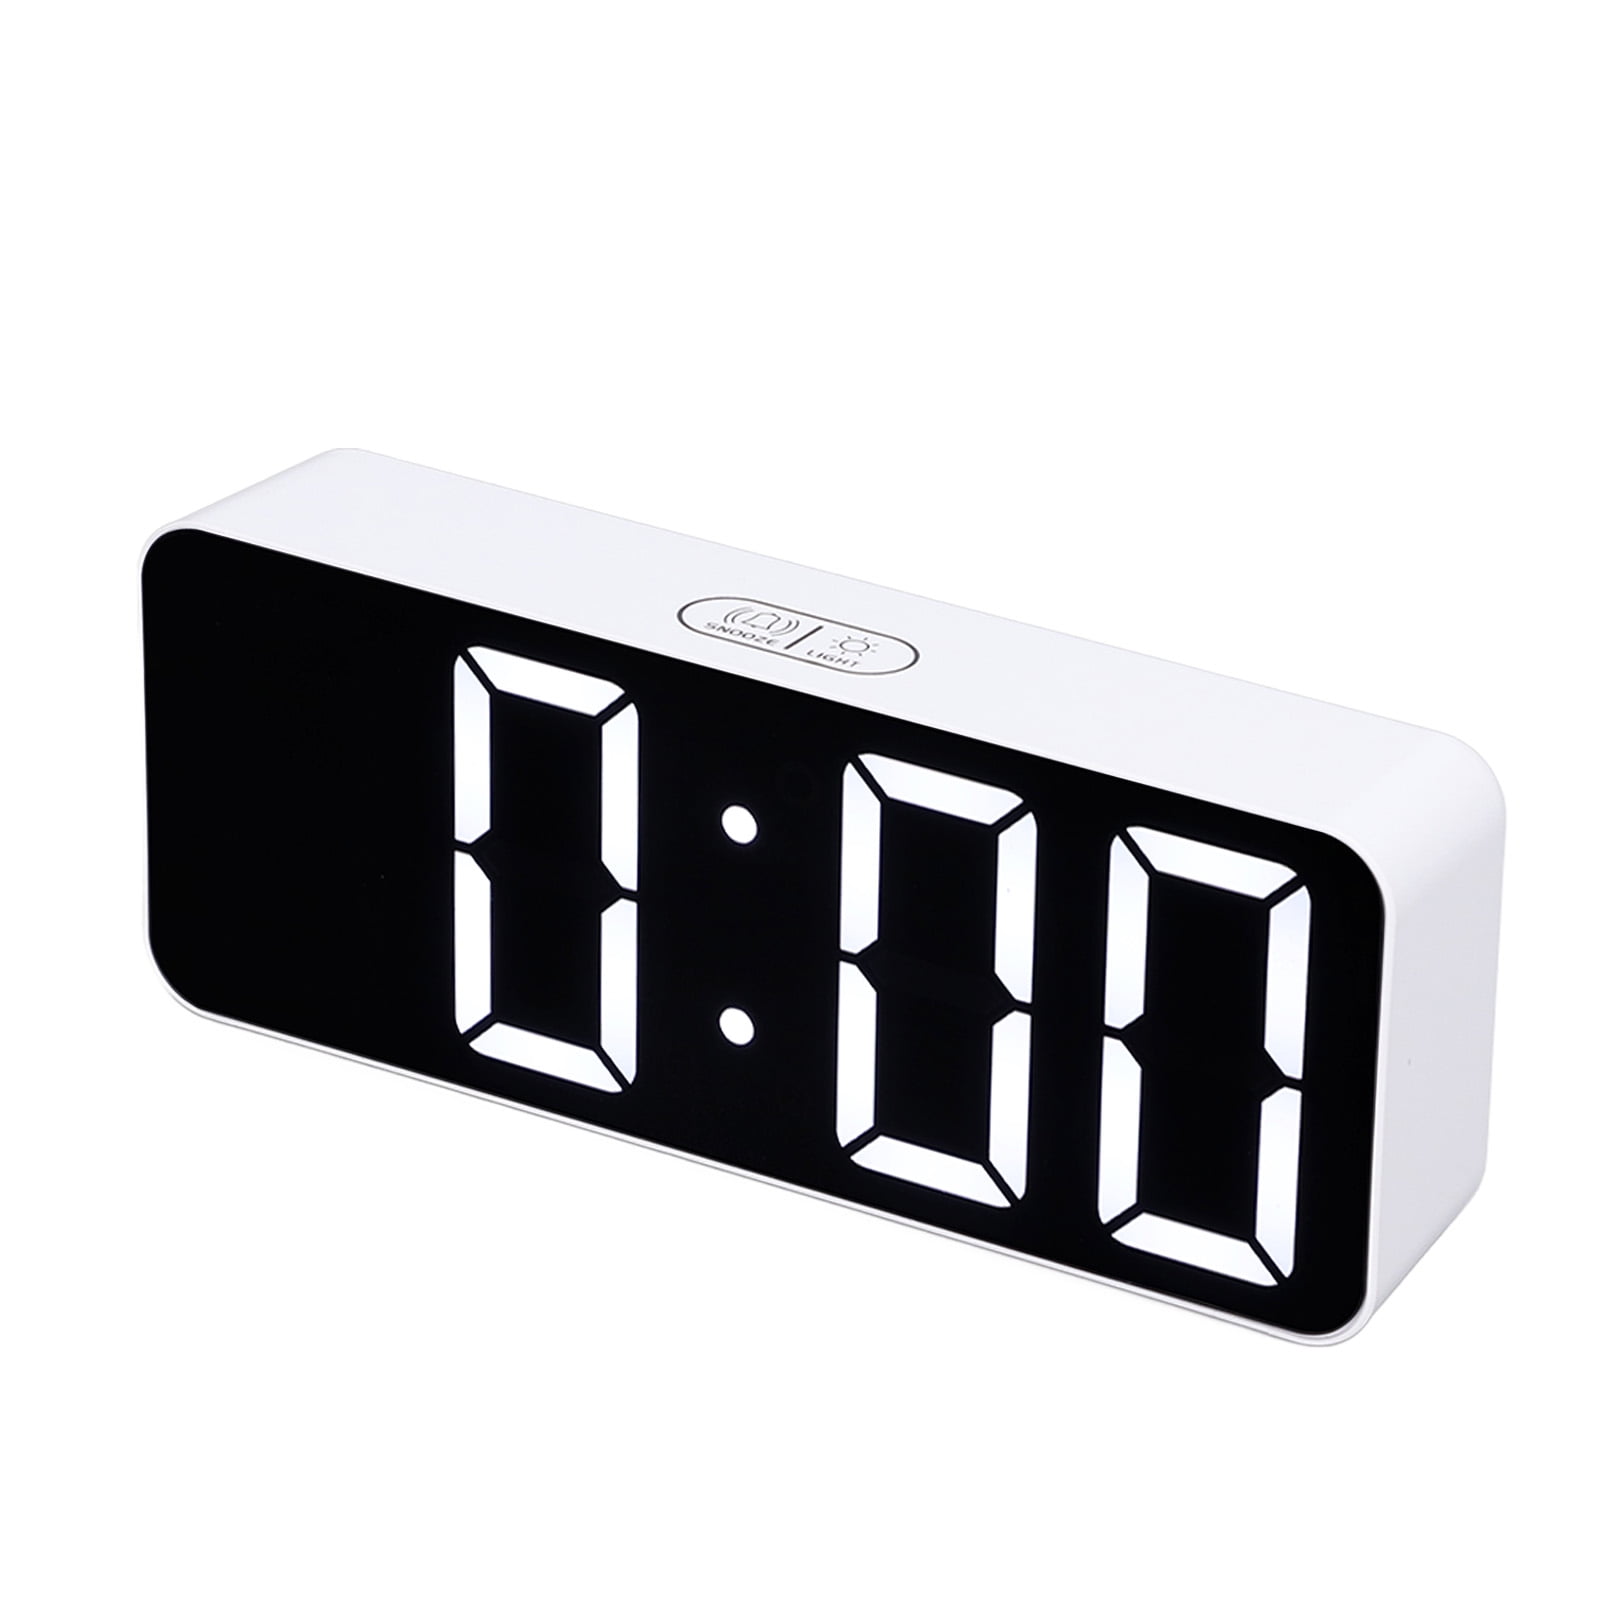 Taylor Precision 5842-21 Mini Digital Timer for sale online 